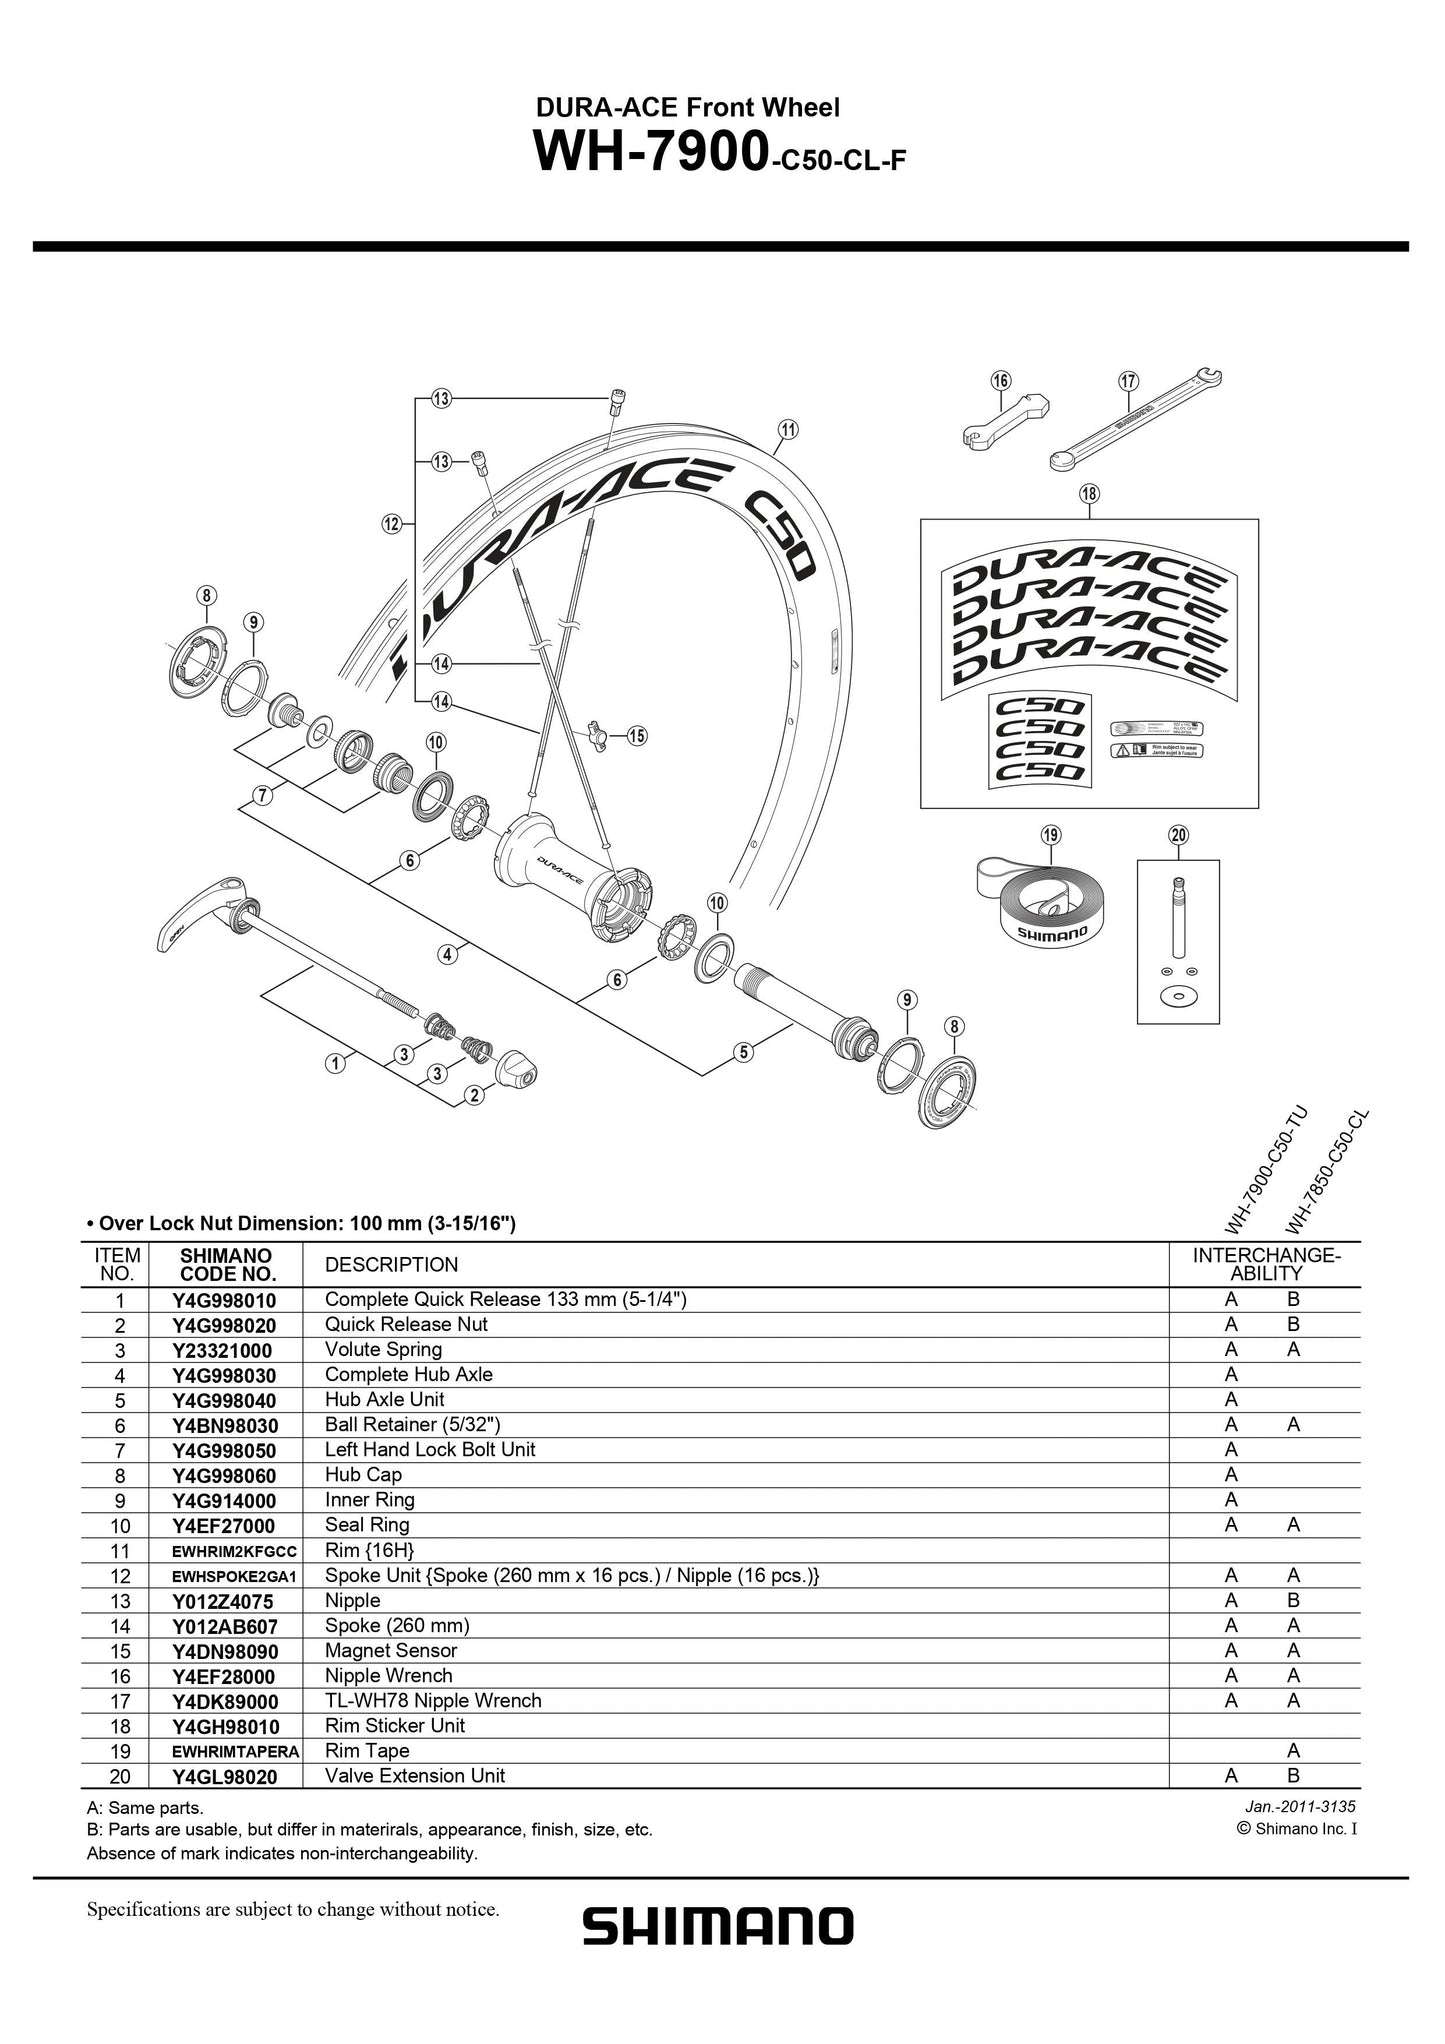 SHIMANO DURA-ACE WH-7900-C50-CL Rim Sticker Unit - Y4GH98010-Pit Crew Cycles